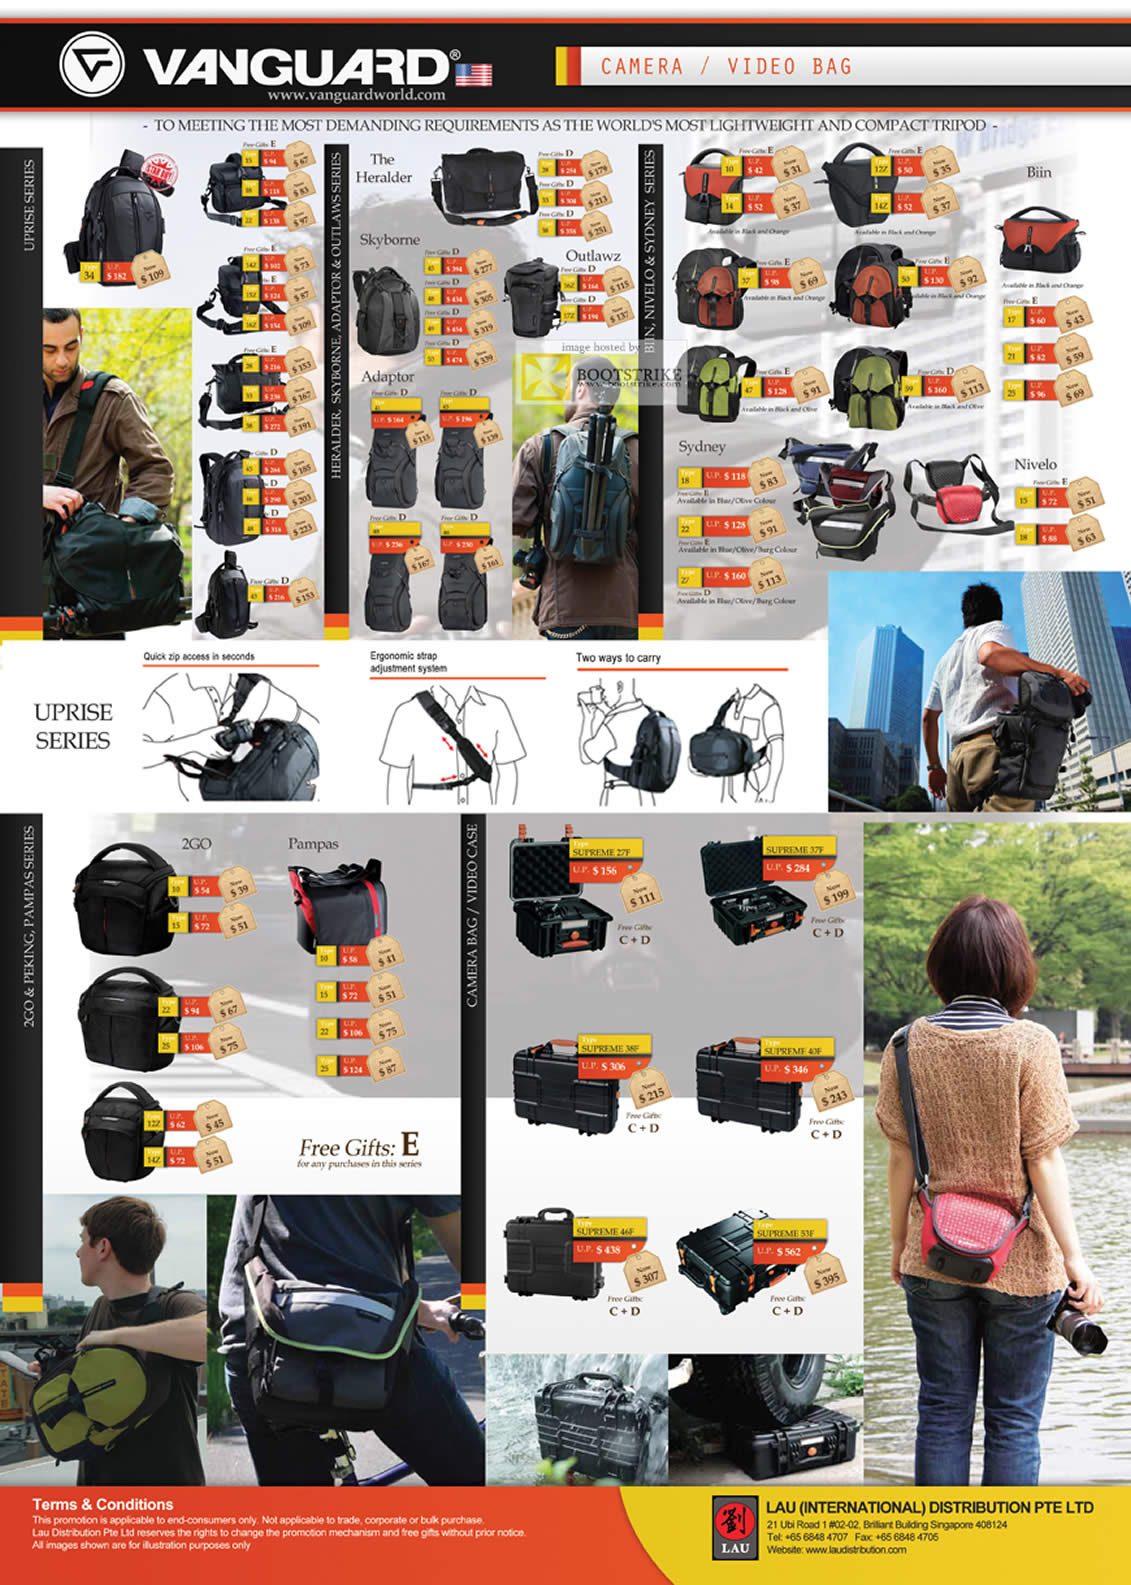 SITEX 2011 price list image brochure of Lau Intl Vanguard Camera Video Bags, Heralder, Skyborne, Adaptor, Sydney, 2GO, Pampas, Supreme